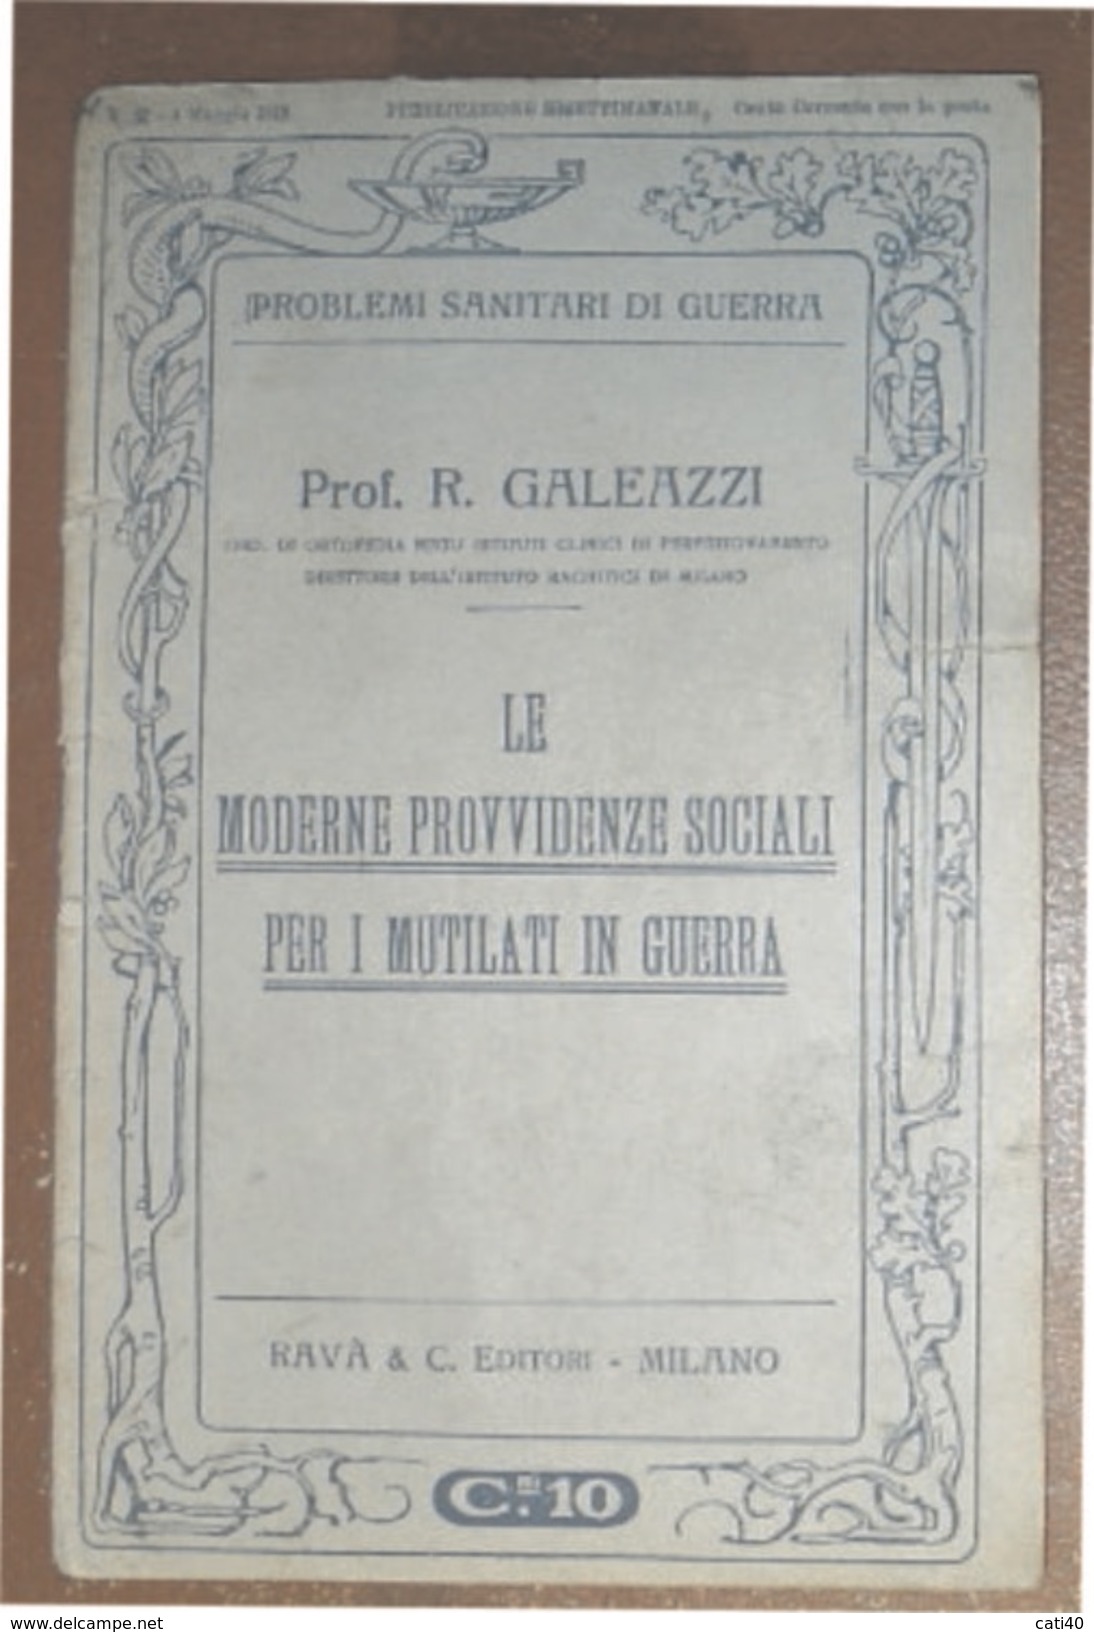 PROBLEMI SANITARI DI GUERRA PREVIDENZE PER I MUTILATI DI GUERRA  RAVA'  EDITORE 1915 DEL PROF. R. GALEAZZI - Guerra 1914-18